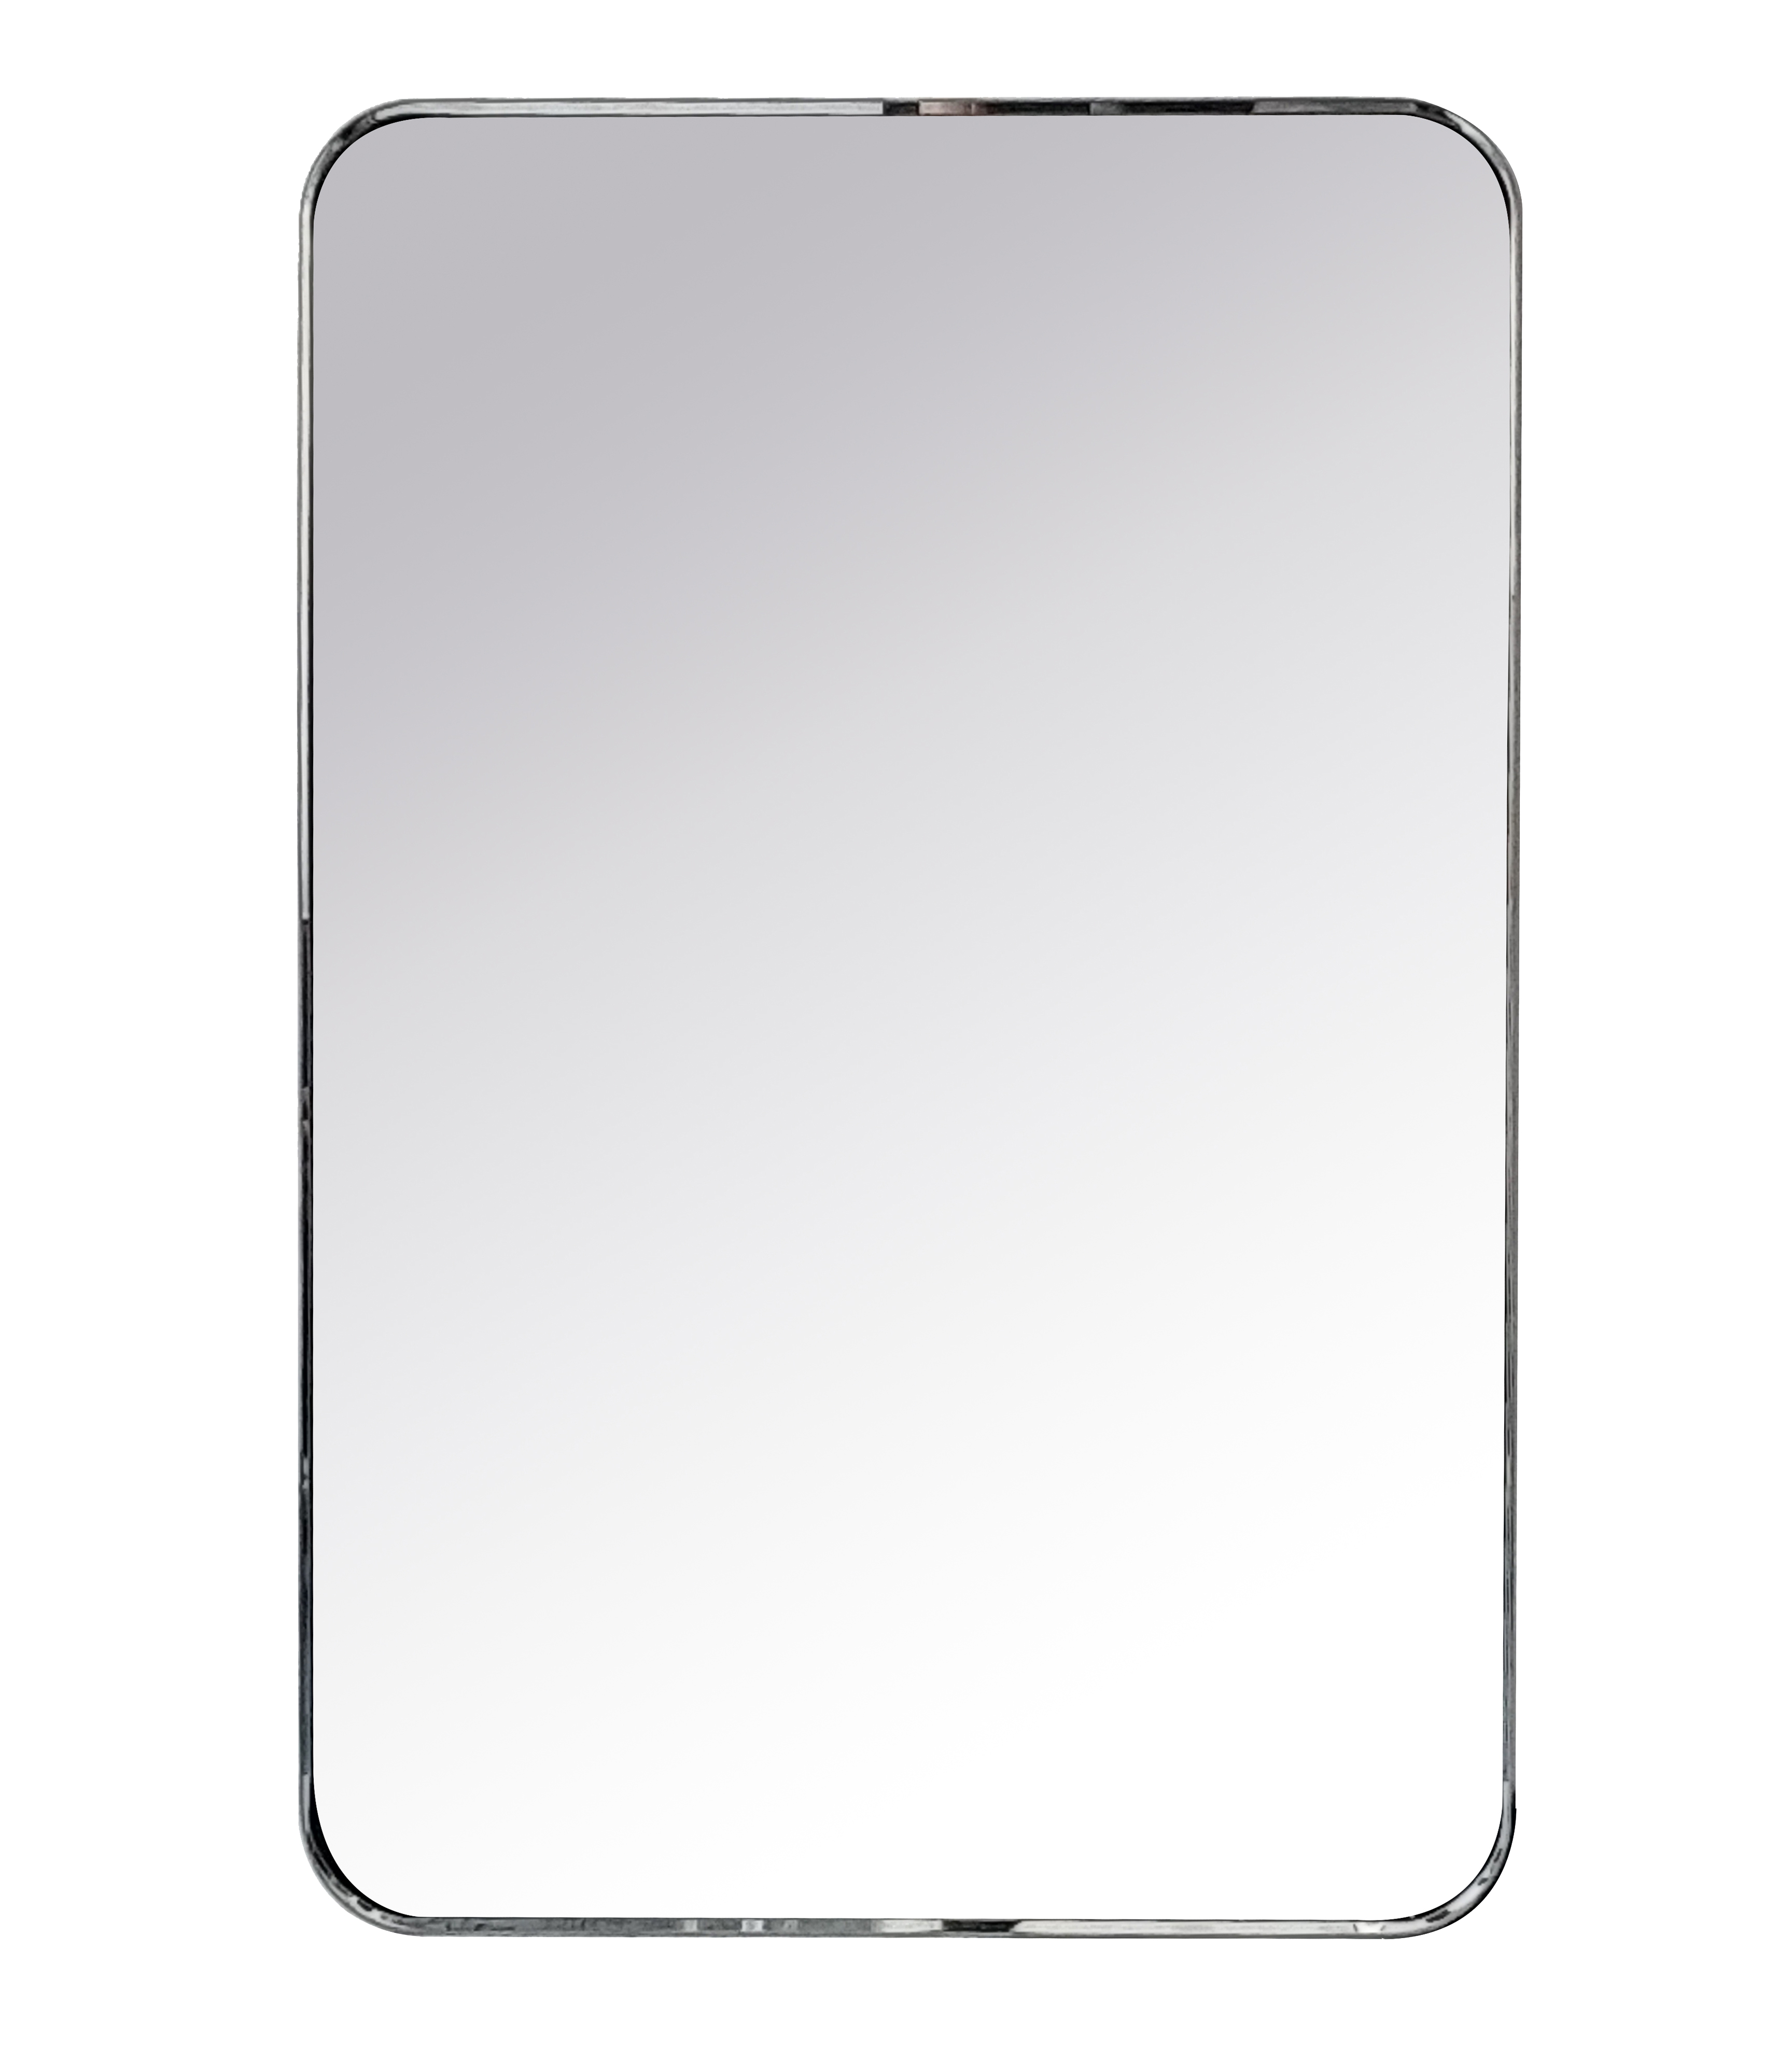 Arthers Stainless Steel Metal Bathroom Vanity Wall Mirror-20x30-Chrome